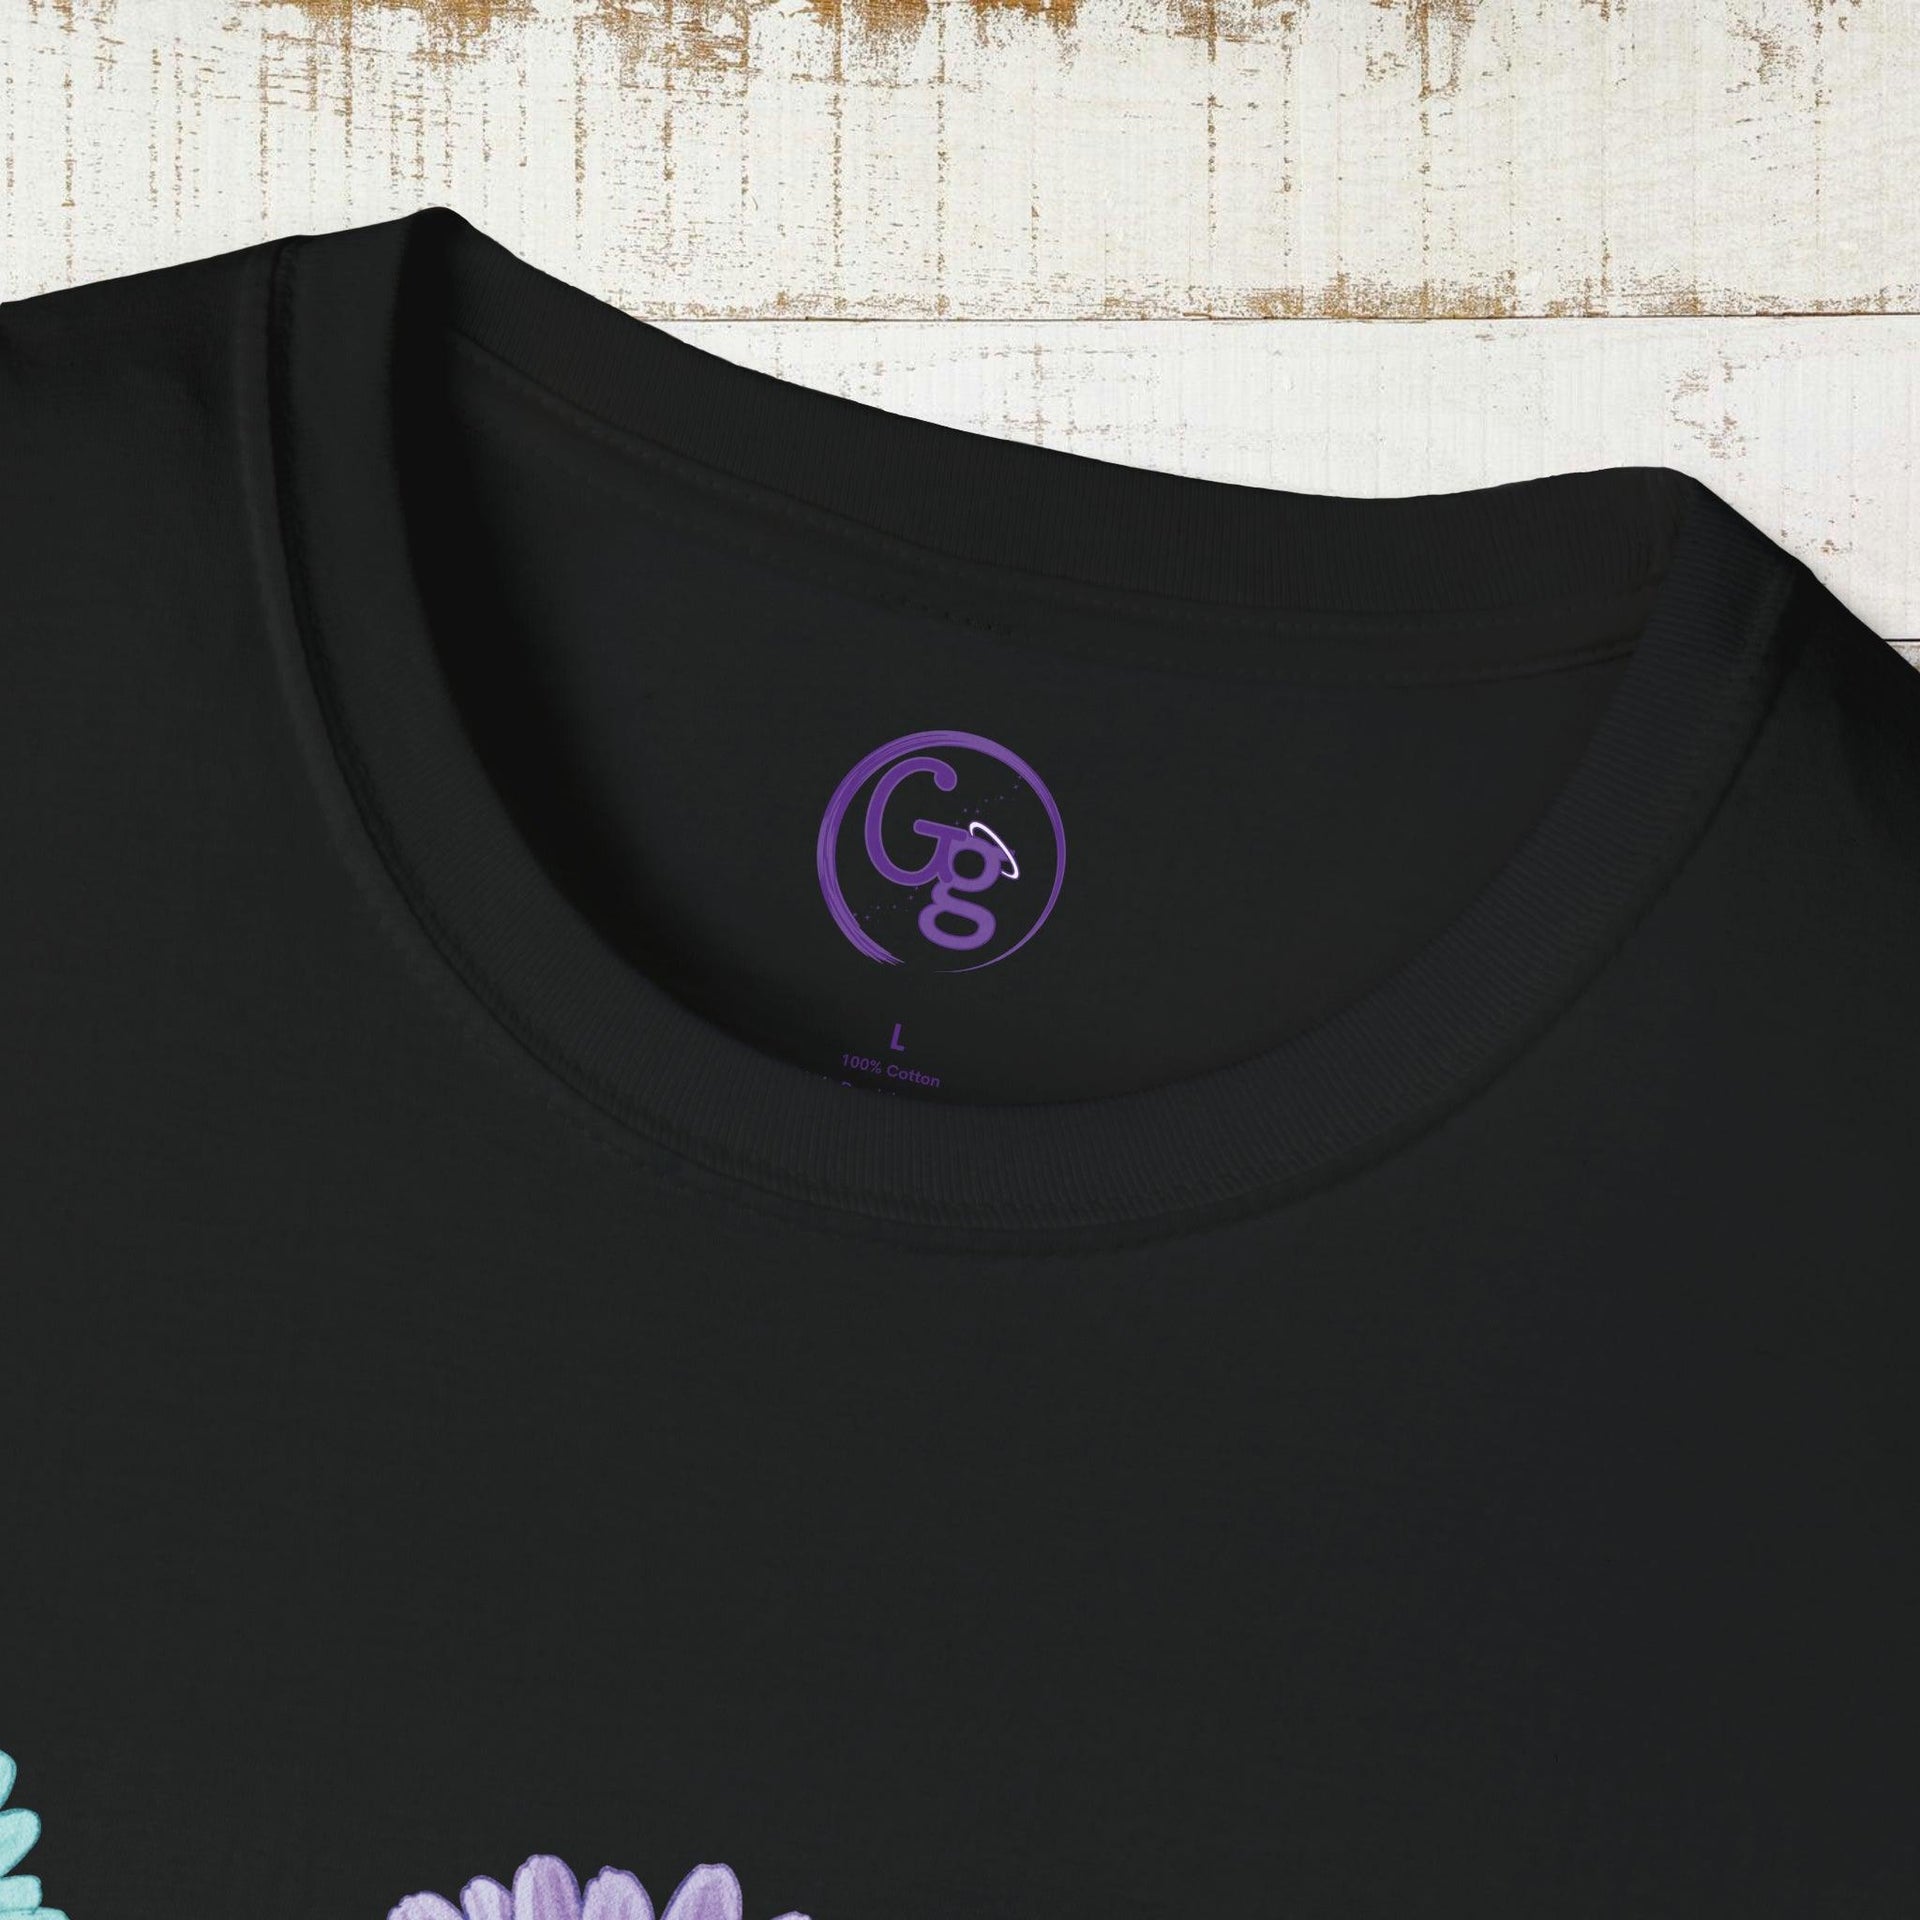 Daisy Faith Hope Love Graphic T-shirt - God's Girl Gifts And Apparel